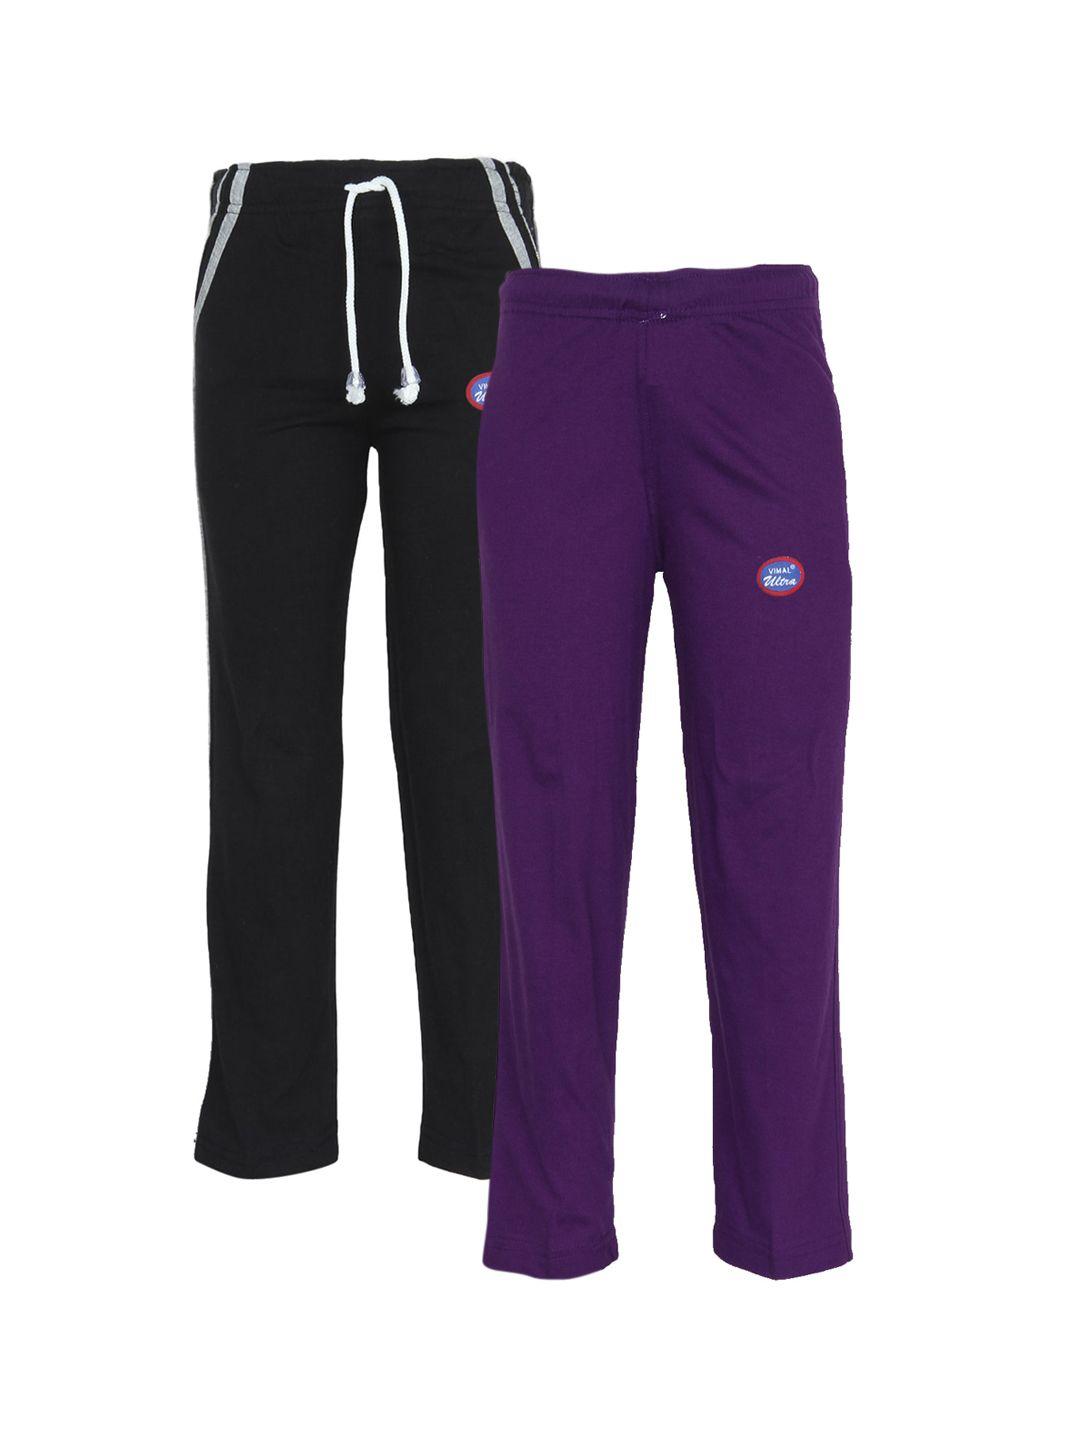 vimal jonney kids pack of 2 black & purple track pants